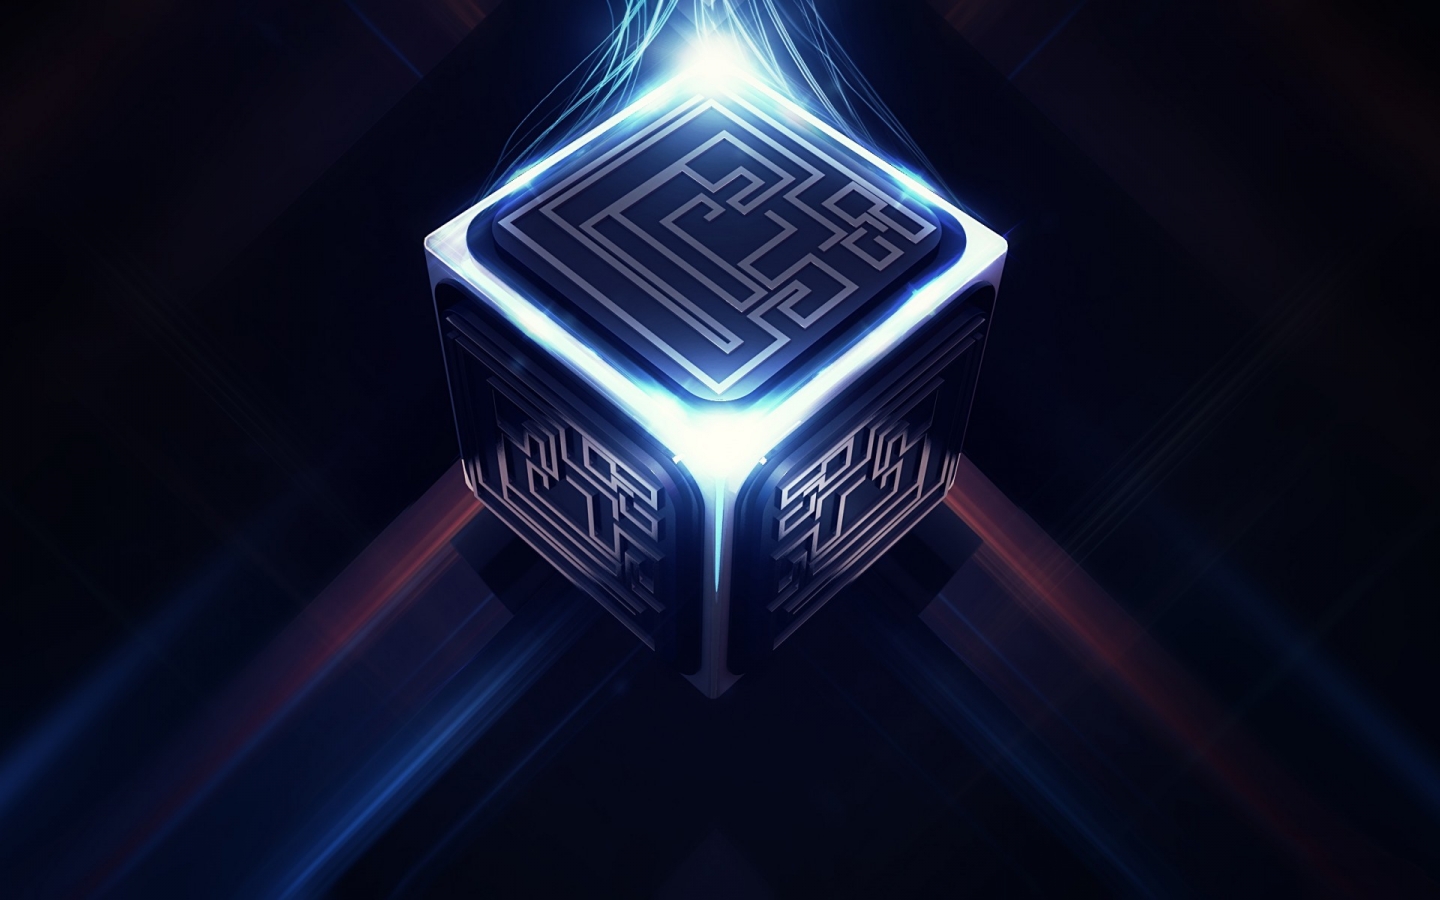 3D Cube Maze for 1440 x 900 widescreen resolution